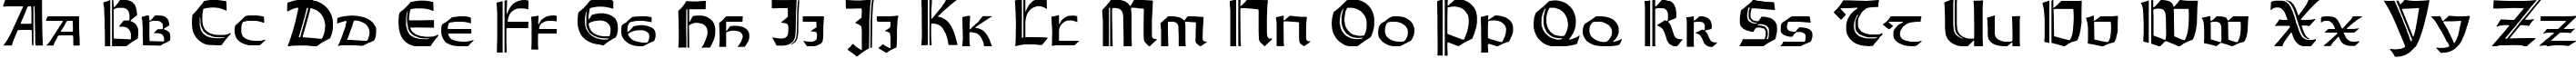 Пример написания английского алфавита шрифтом Orotund Capitals Heavy